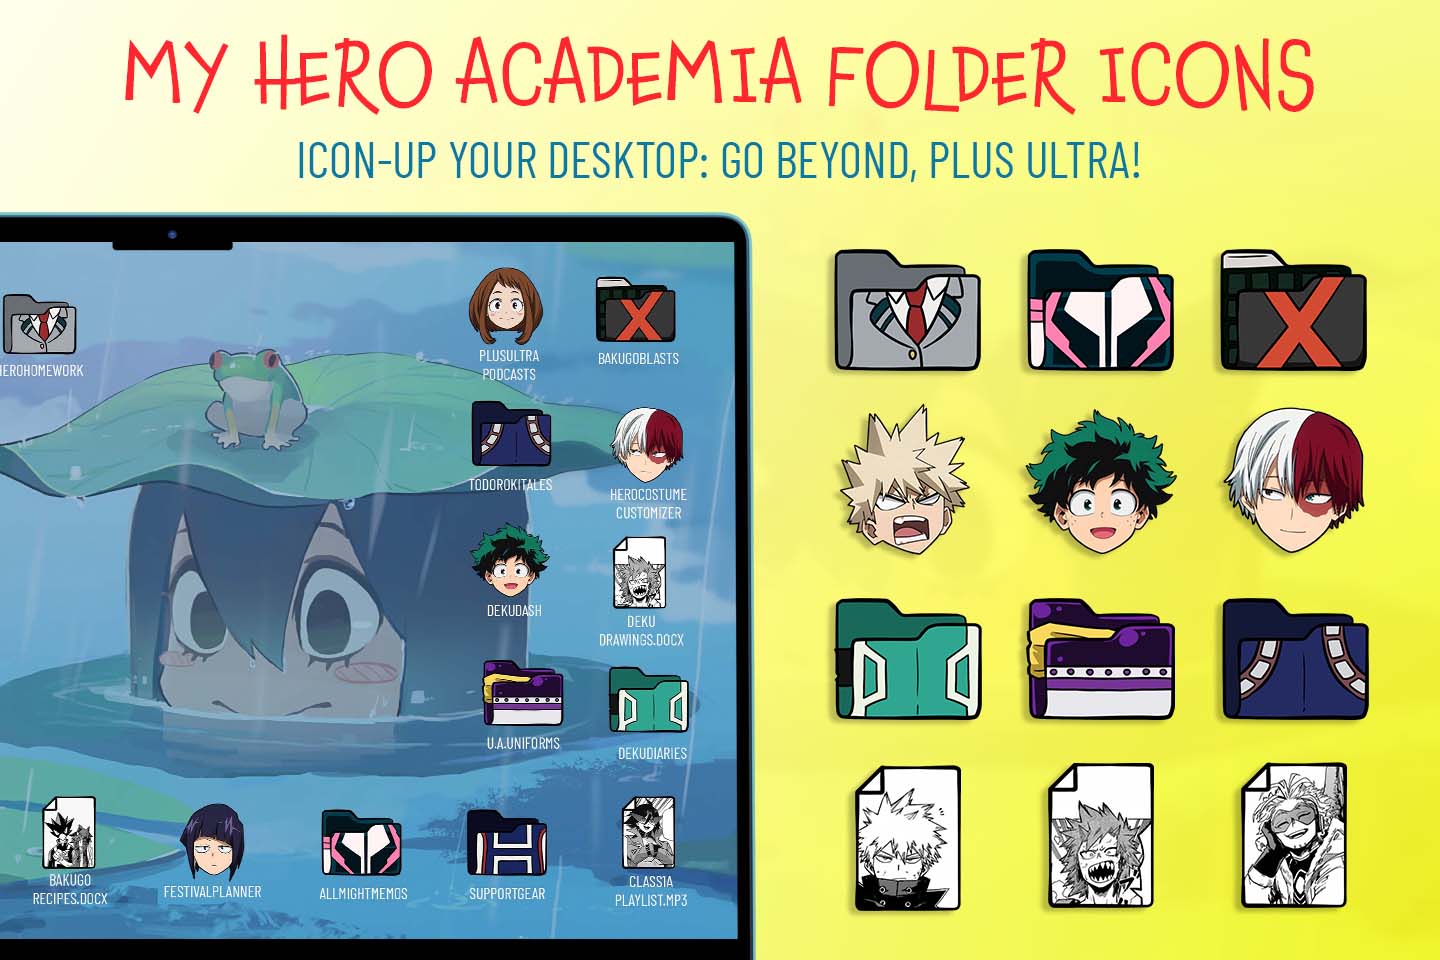 Paquete de iconos de carpeta My Hero Academia